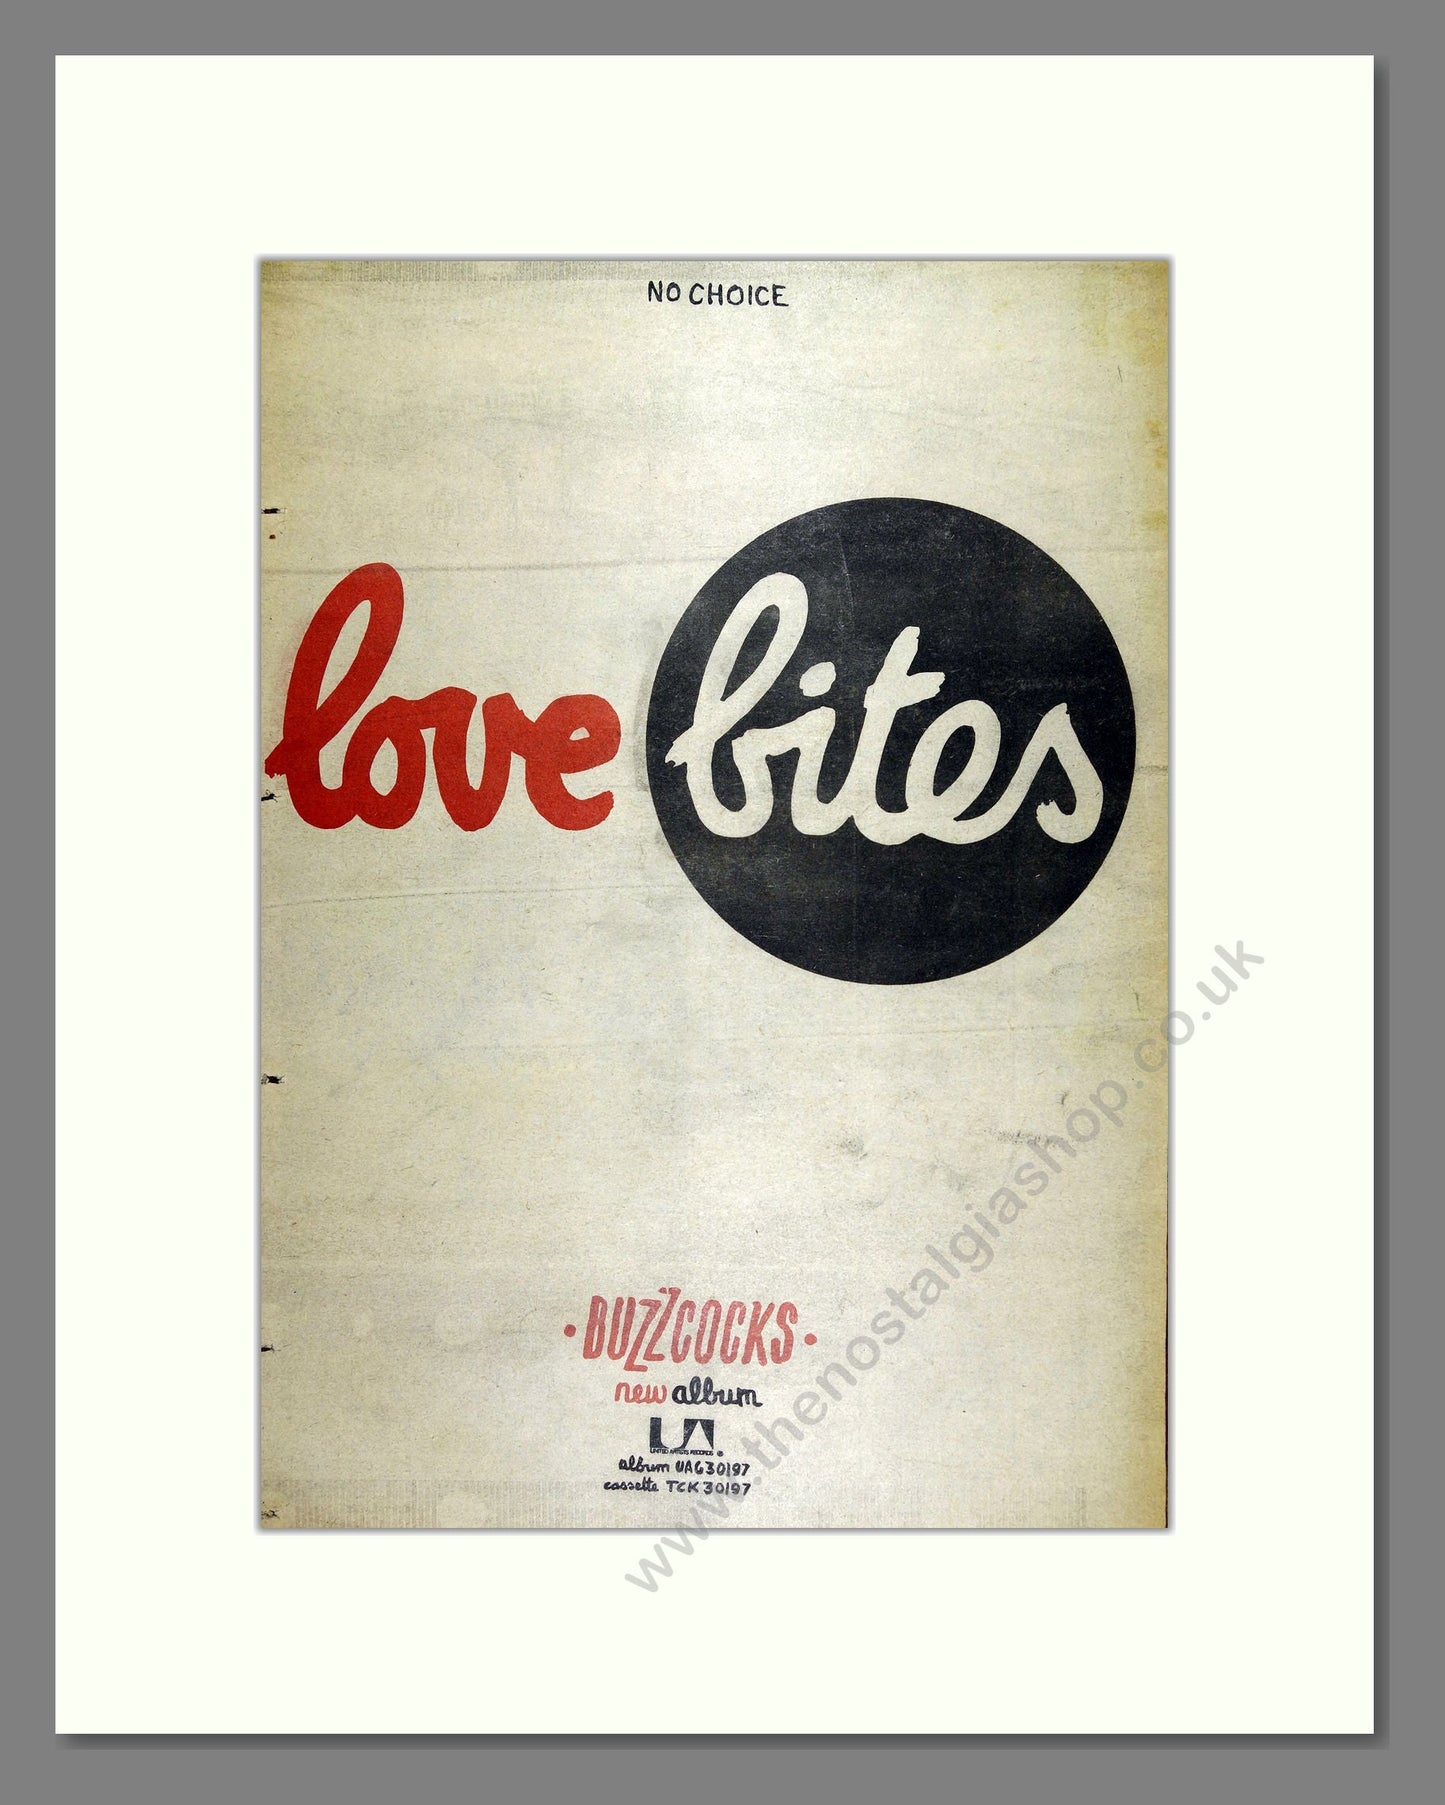 Buzzcocks - Love Bites. Vintage Advert 1978 (ref AD16087)